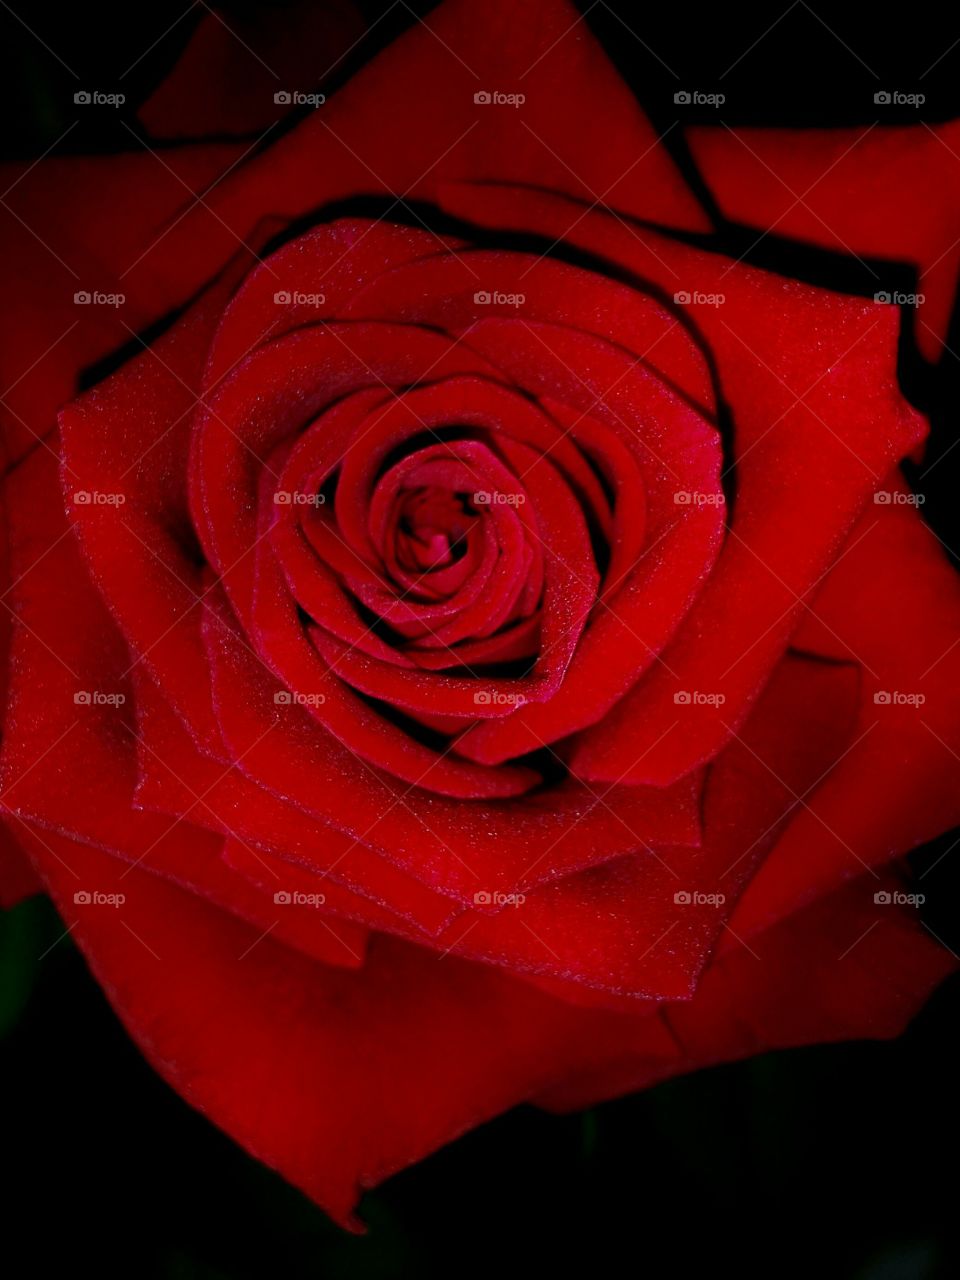 rose. my favourite rose